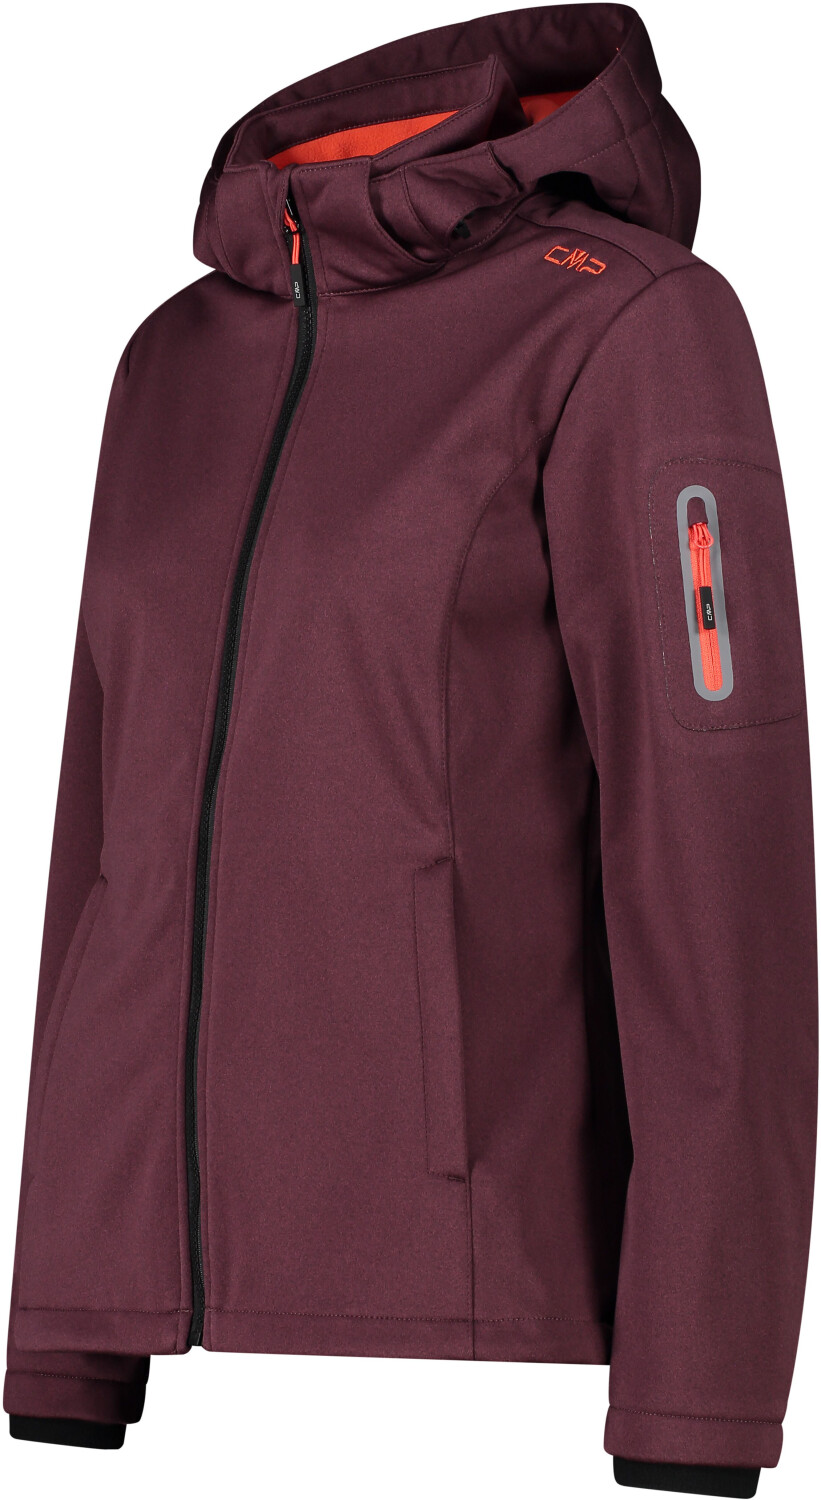 CMP Damenjacke aus Softshell Meliert (39A5006M) burgundy mel. ab 48,69 € |  Preisvergleich bei